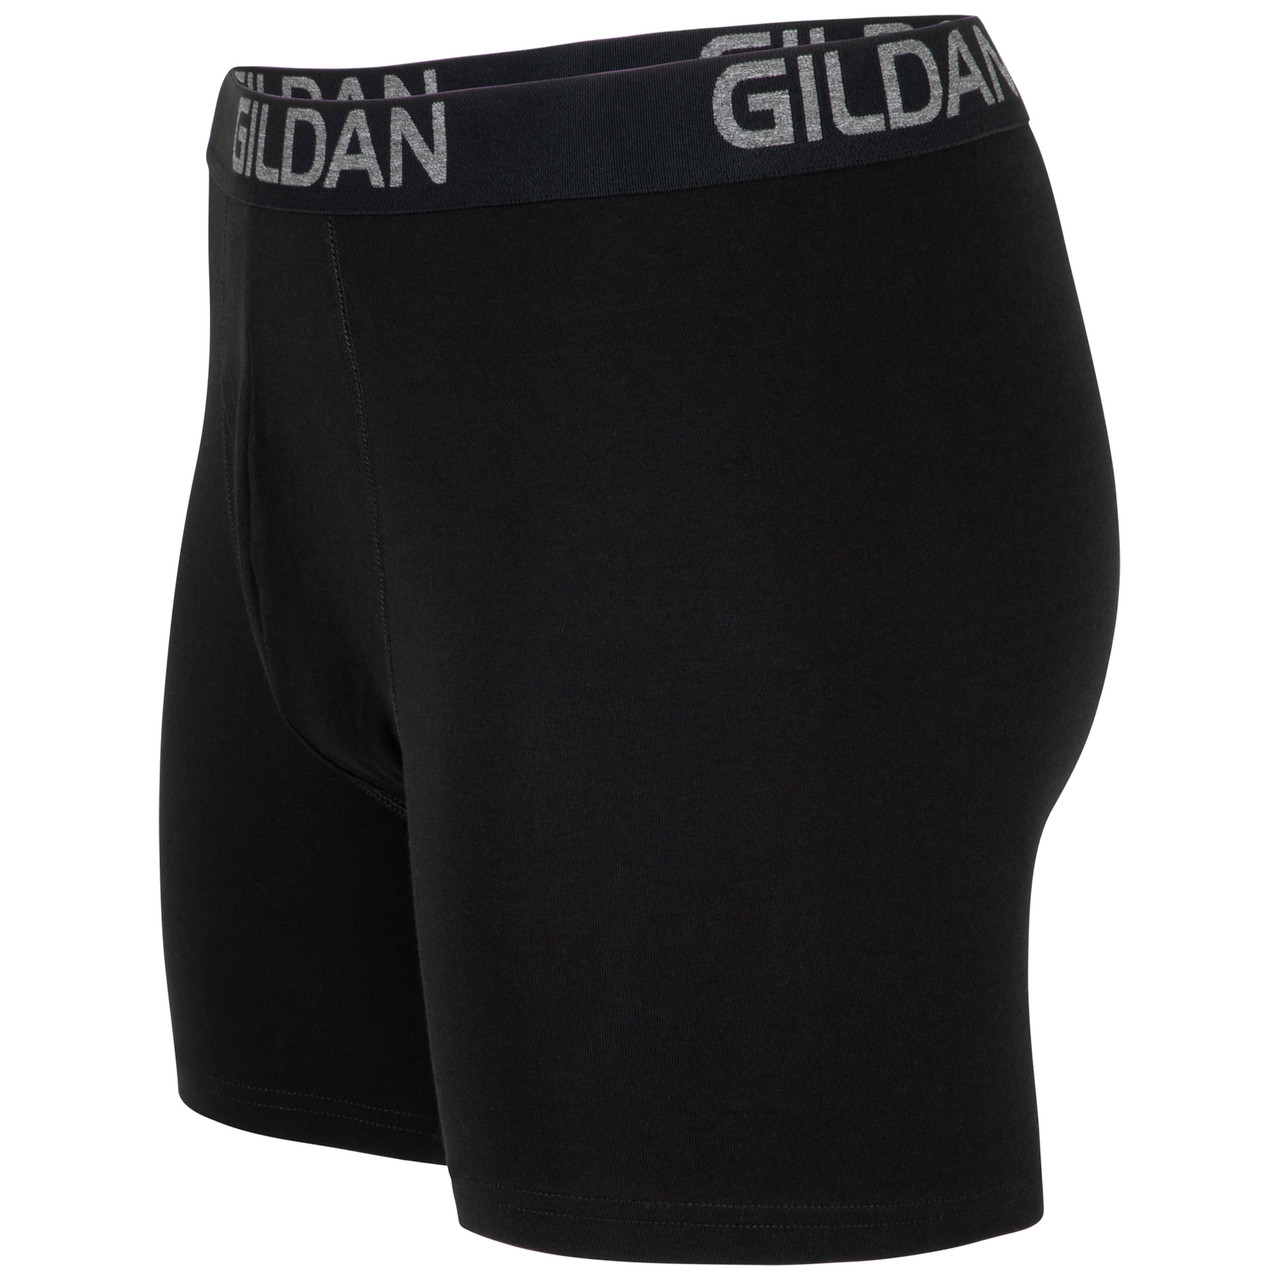 Gildan Men's Covered Waistband Boxer Briefs, Multipack, Black